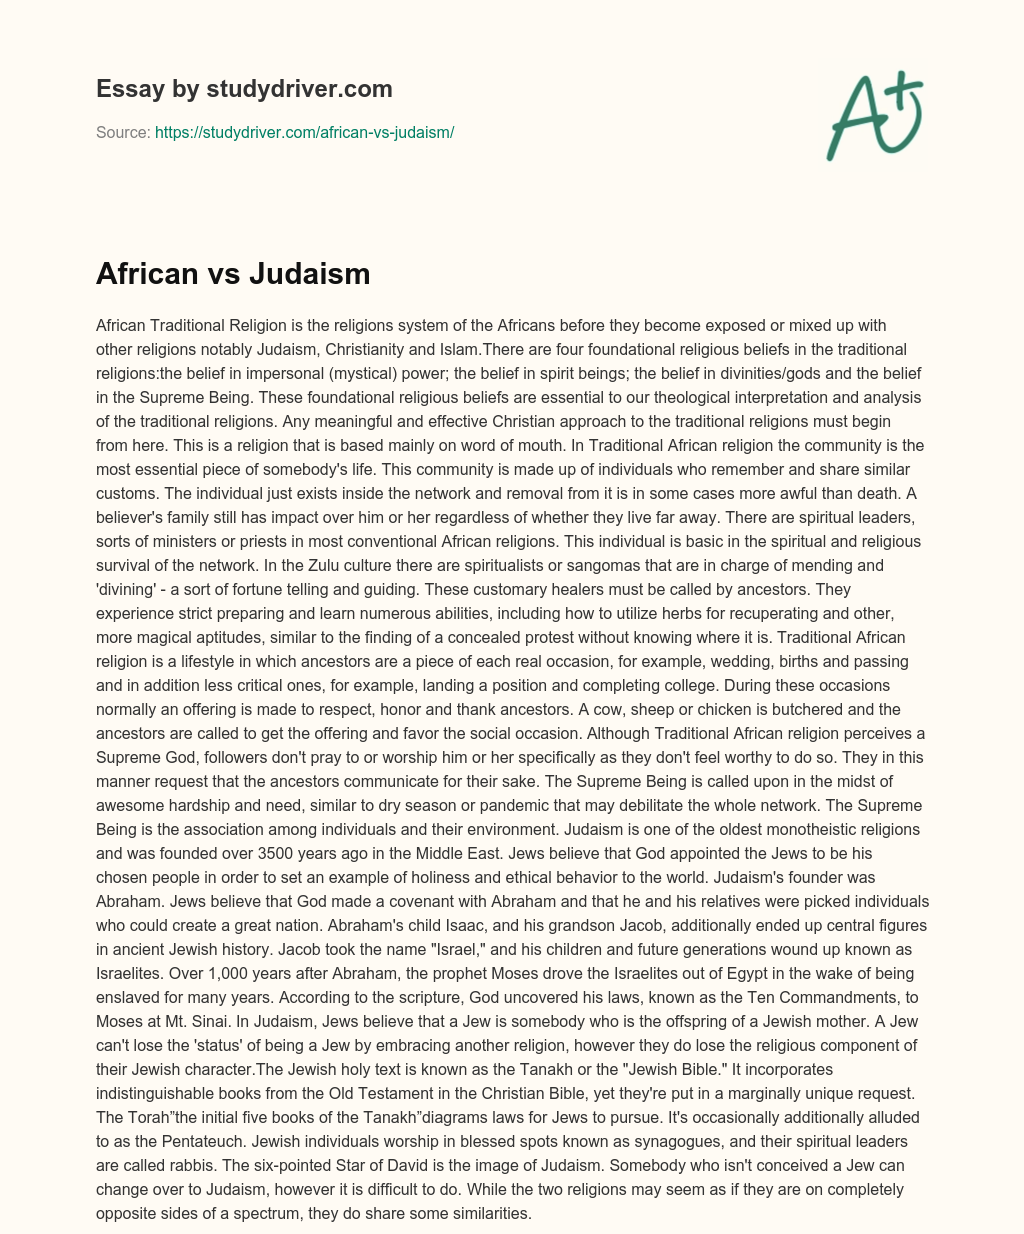 African Vs Judaism essay